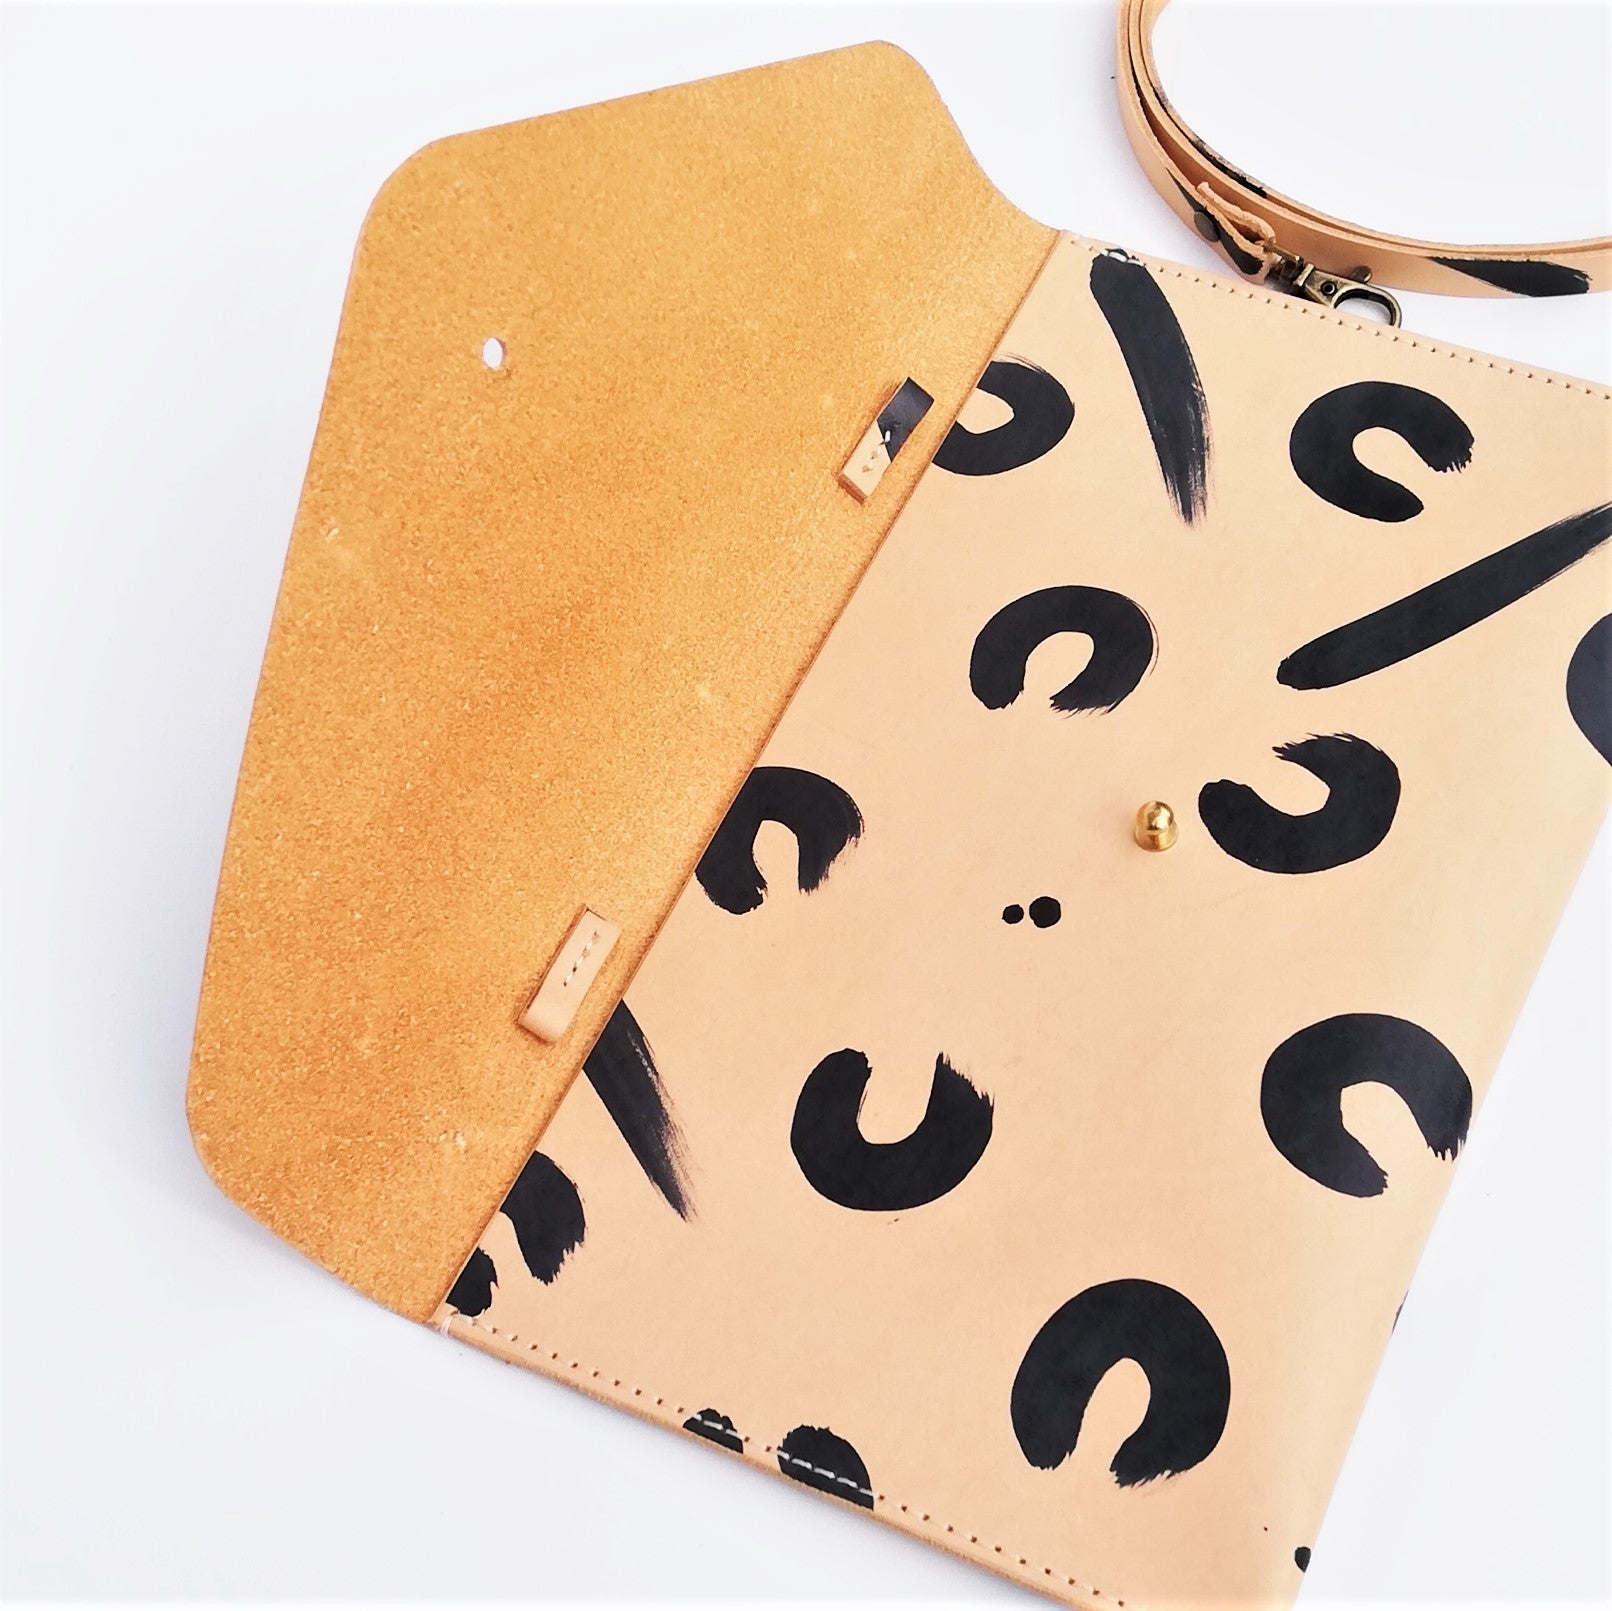 Handmade leather Leopard Shoulder/Clutch Bag - Hand Painted